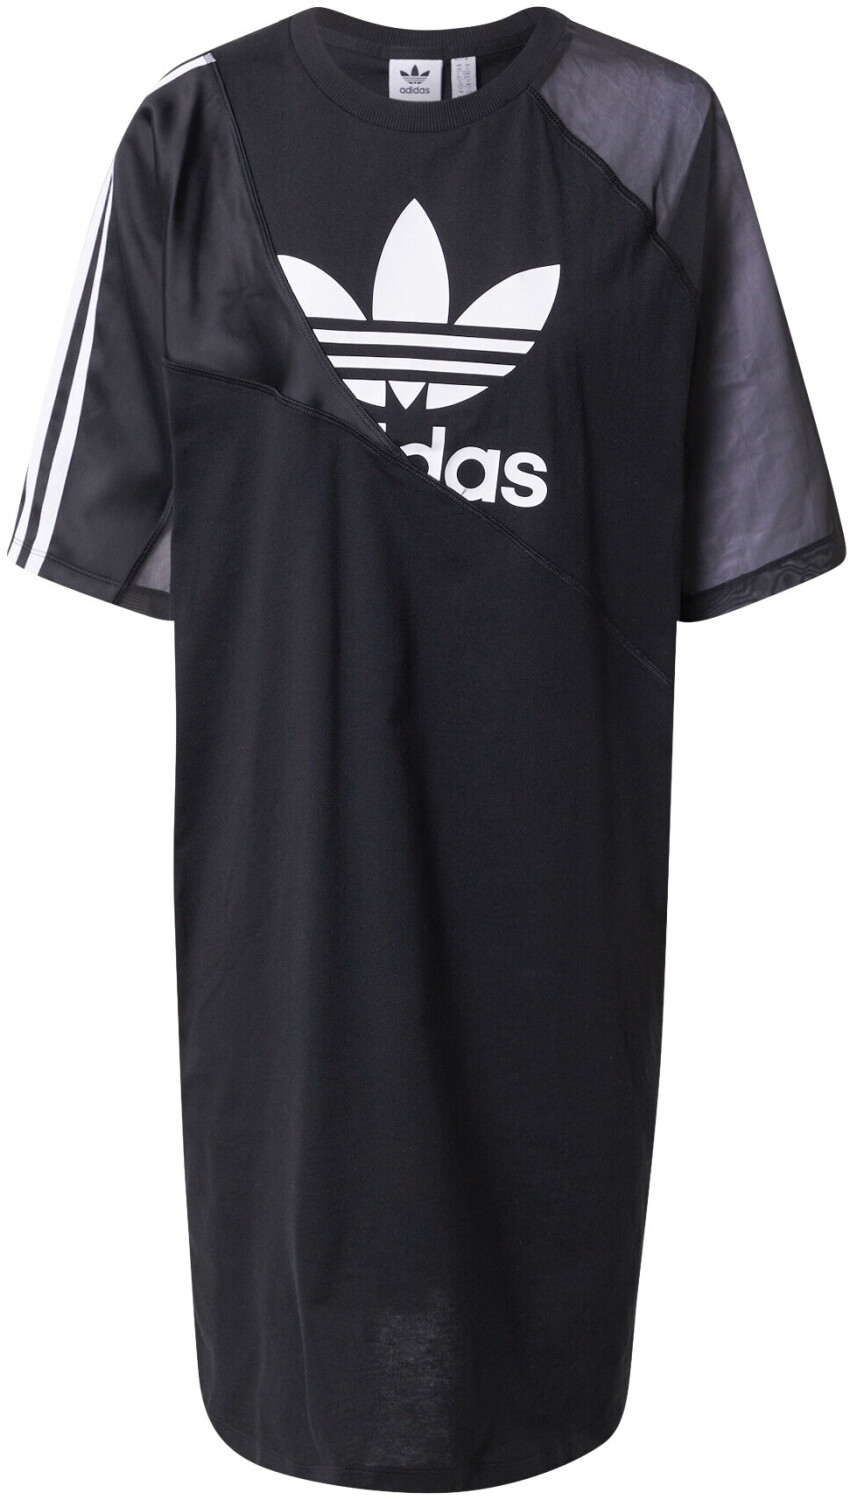 Preisvergleich Trefoil Split € ab Adidas adicolor bei 29,99 | black/white T-Shirt-Dress